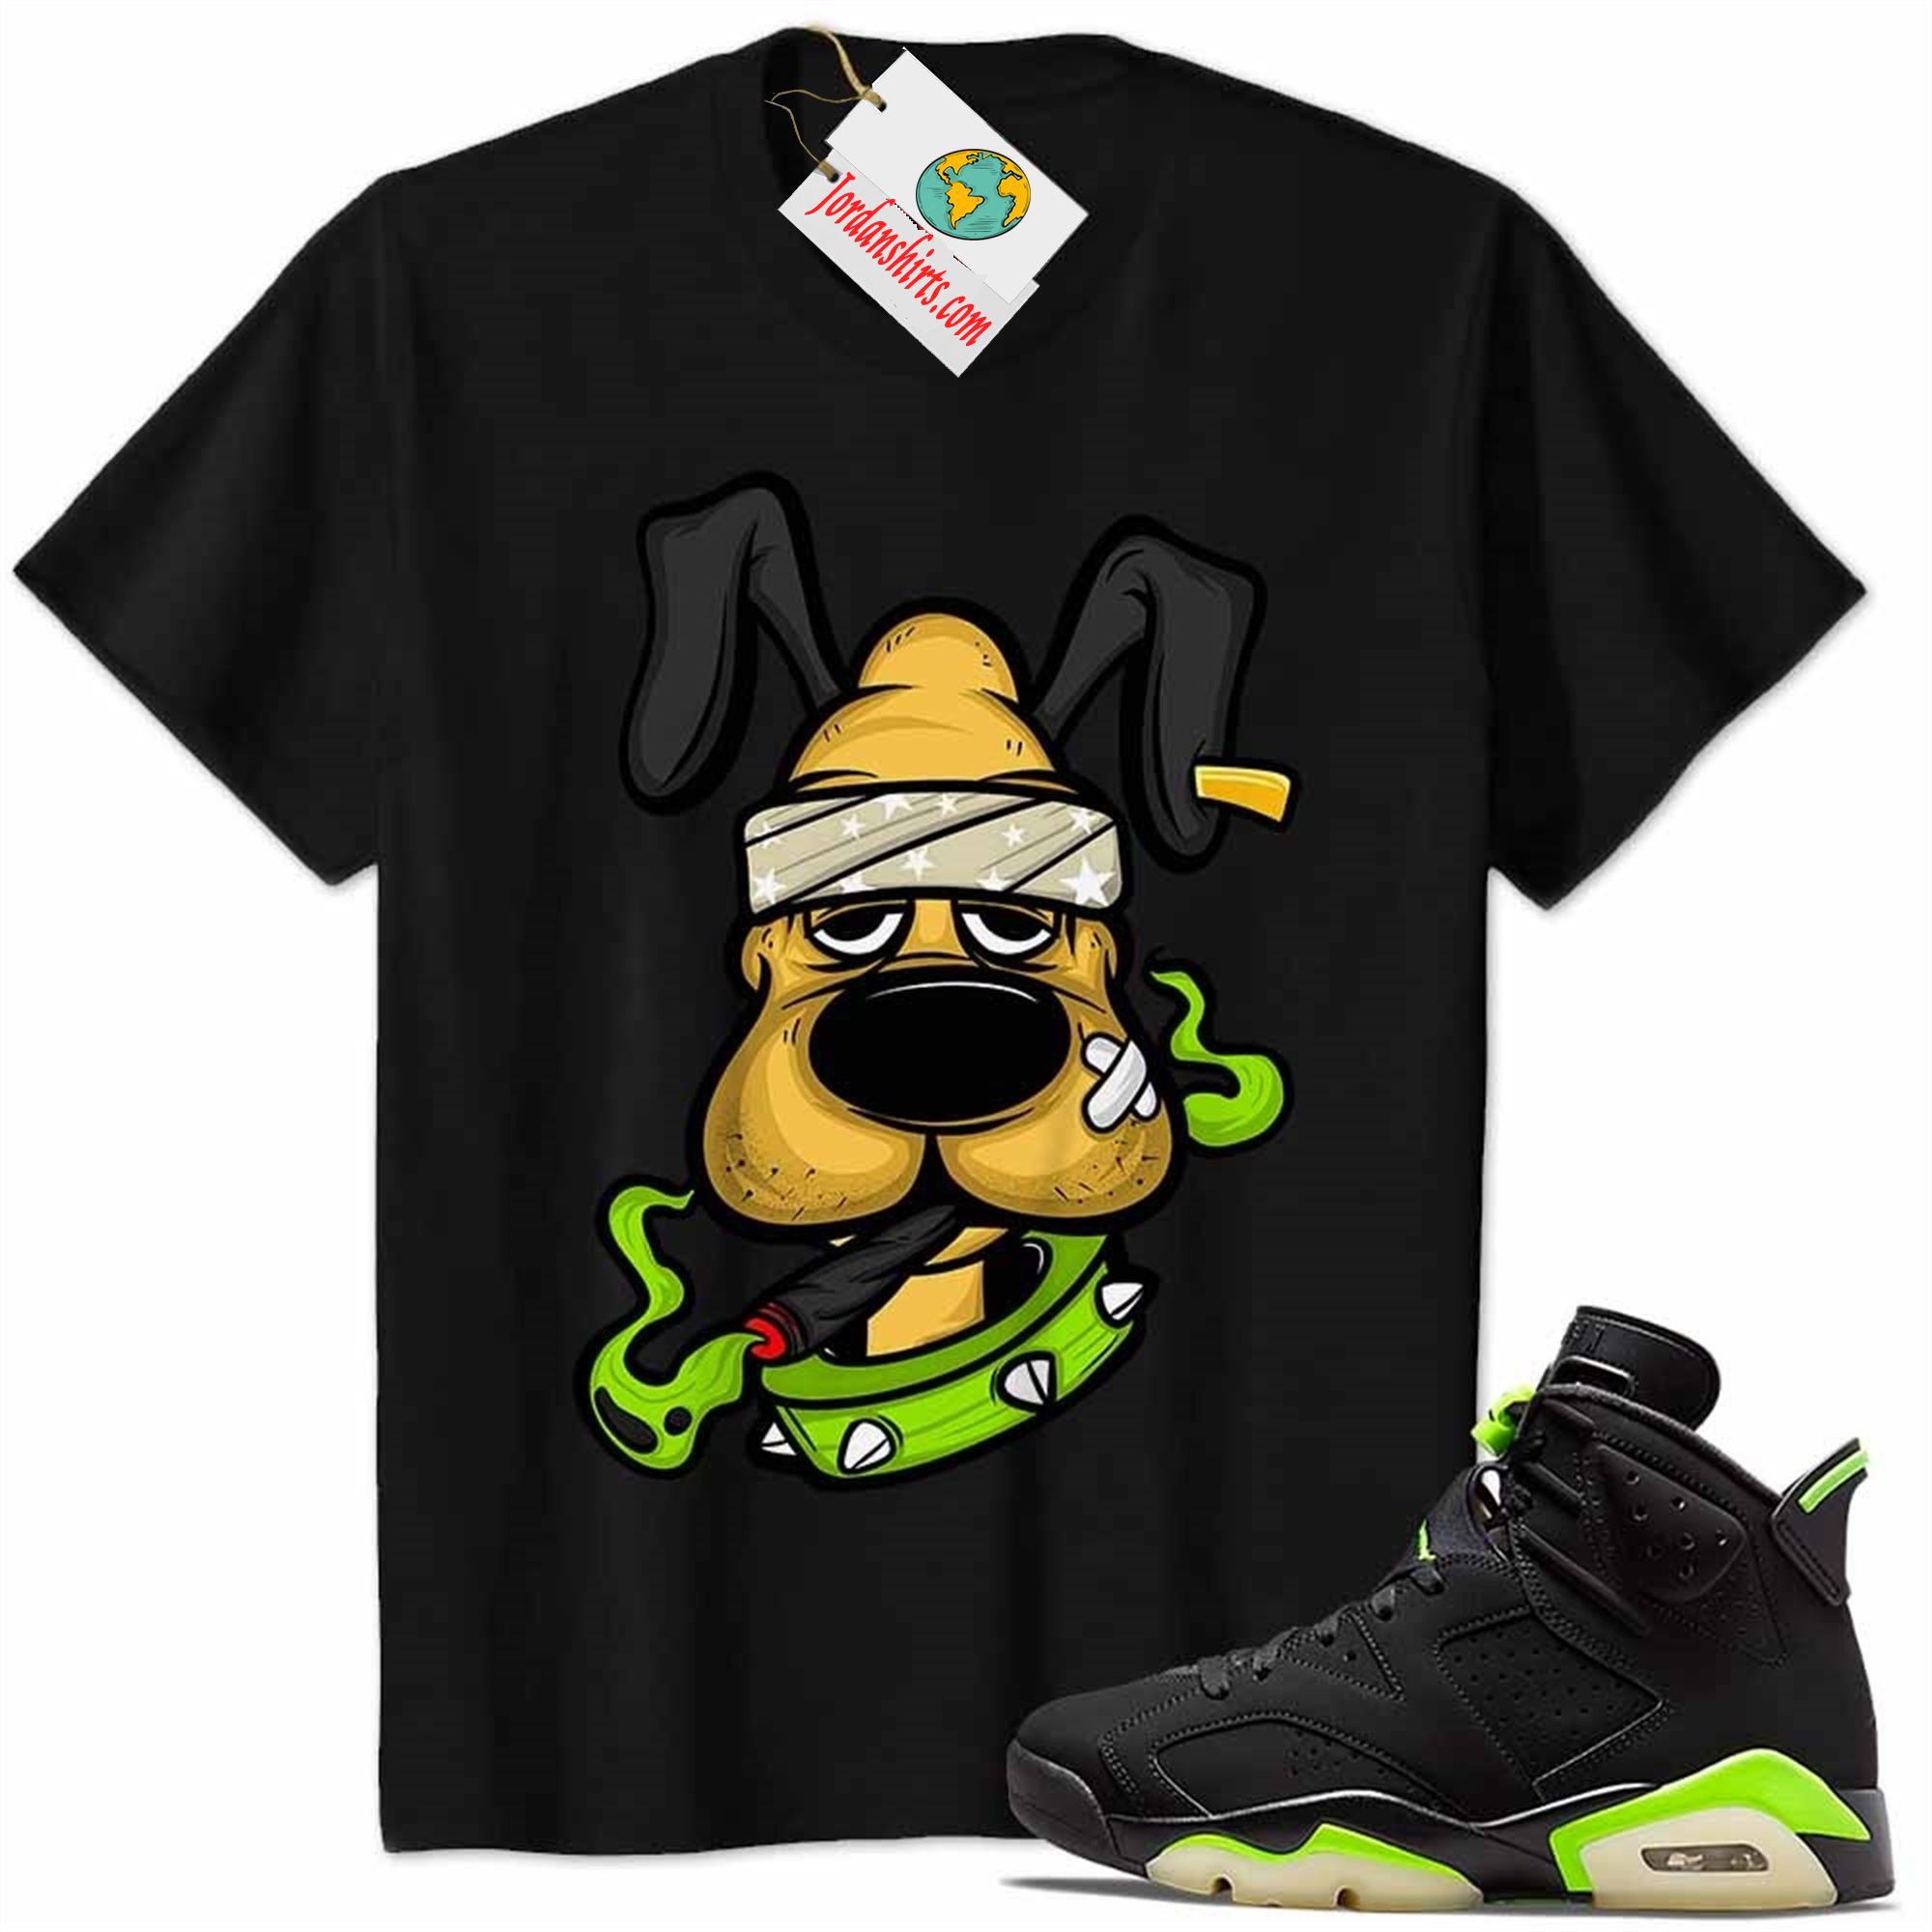 Jordan 6 Shirt, Gangster Pluto Smoke Weed Black Air Jordan 6 Electric Green 6s Full Size Up To 5xl